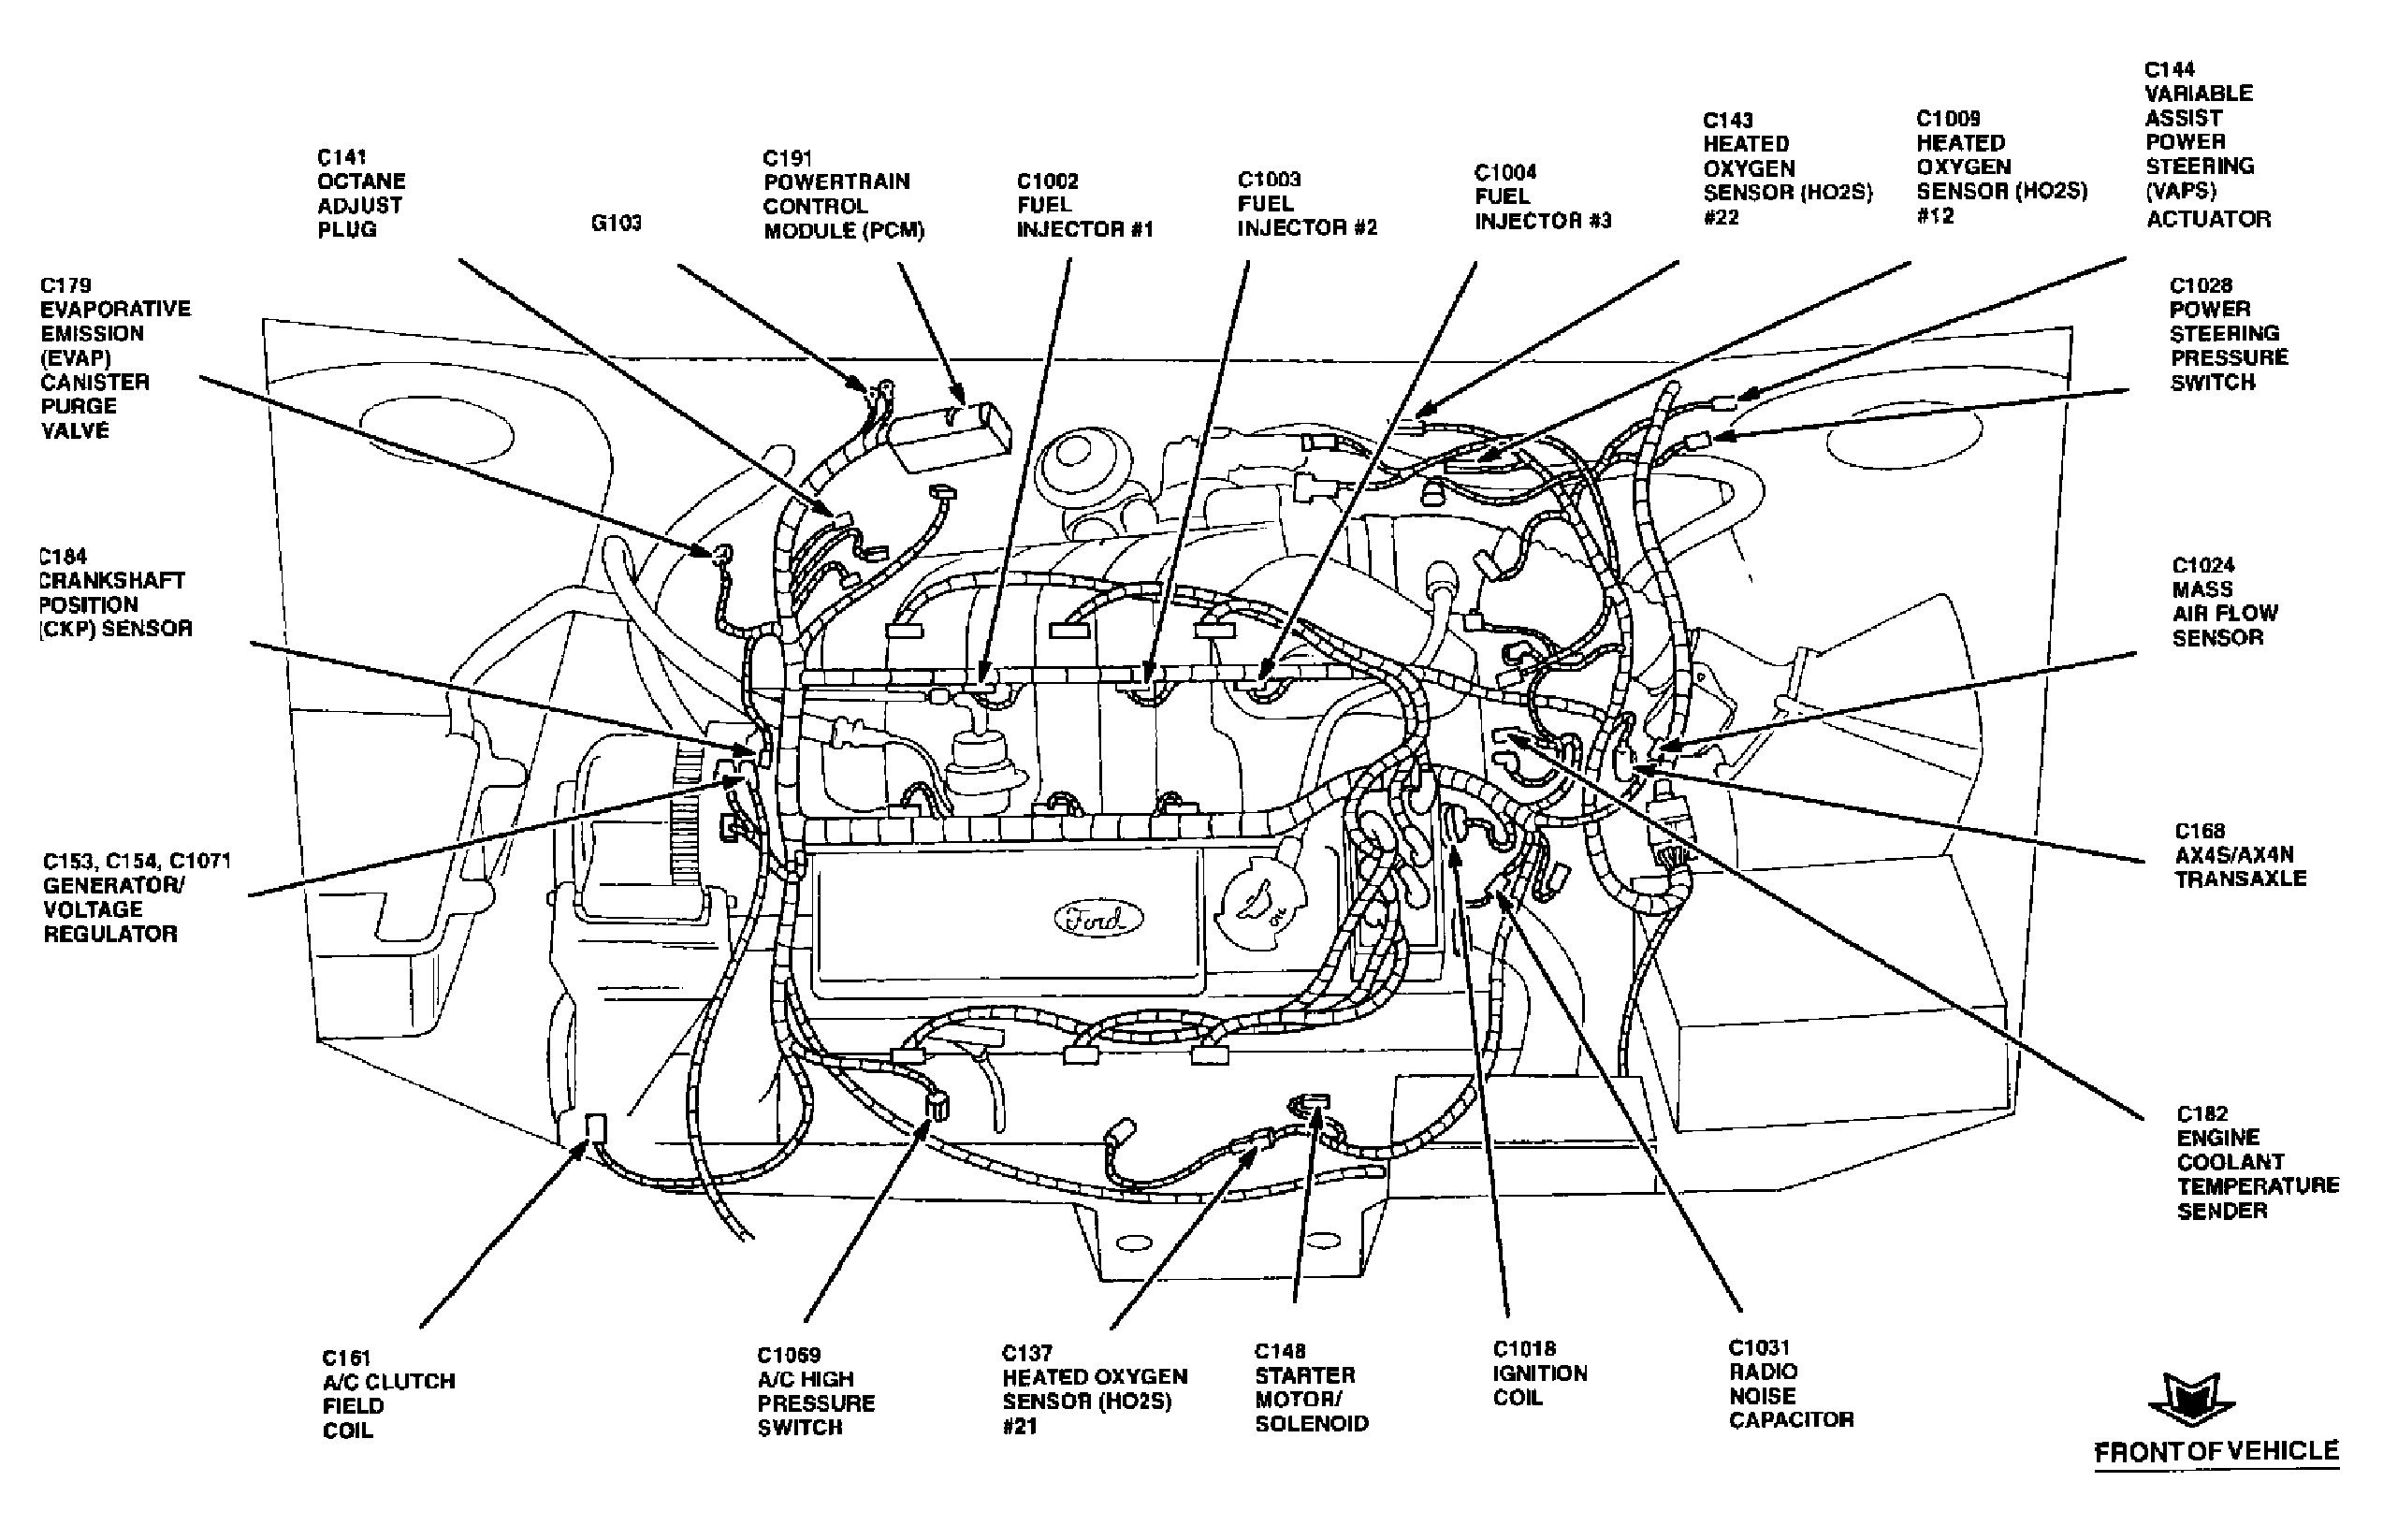 [DIAGRAM] 1977 Ford F 150 Heater Wiring Diagram